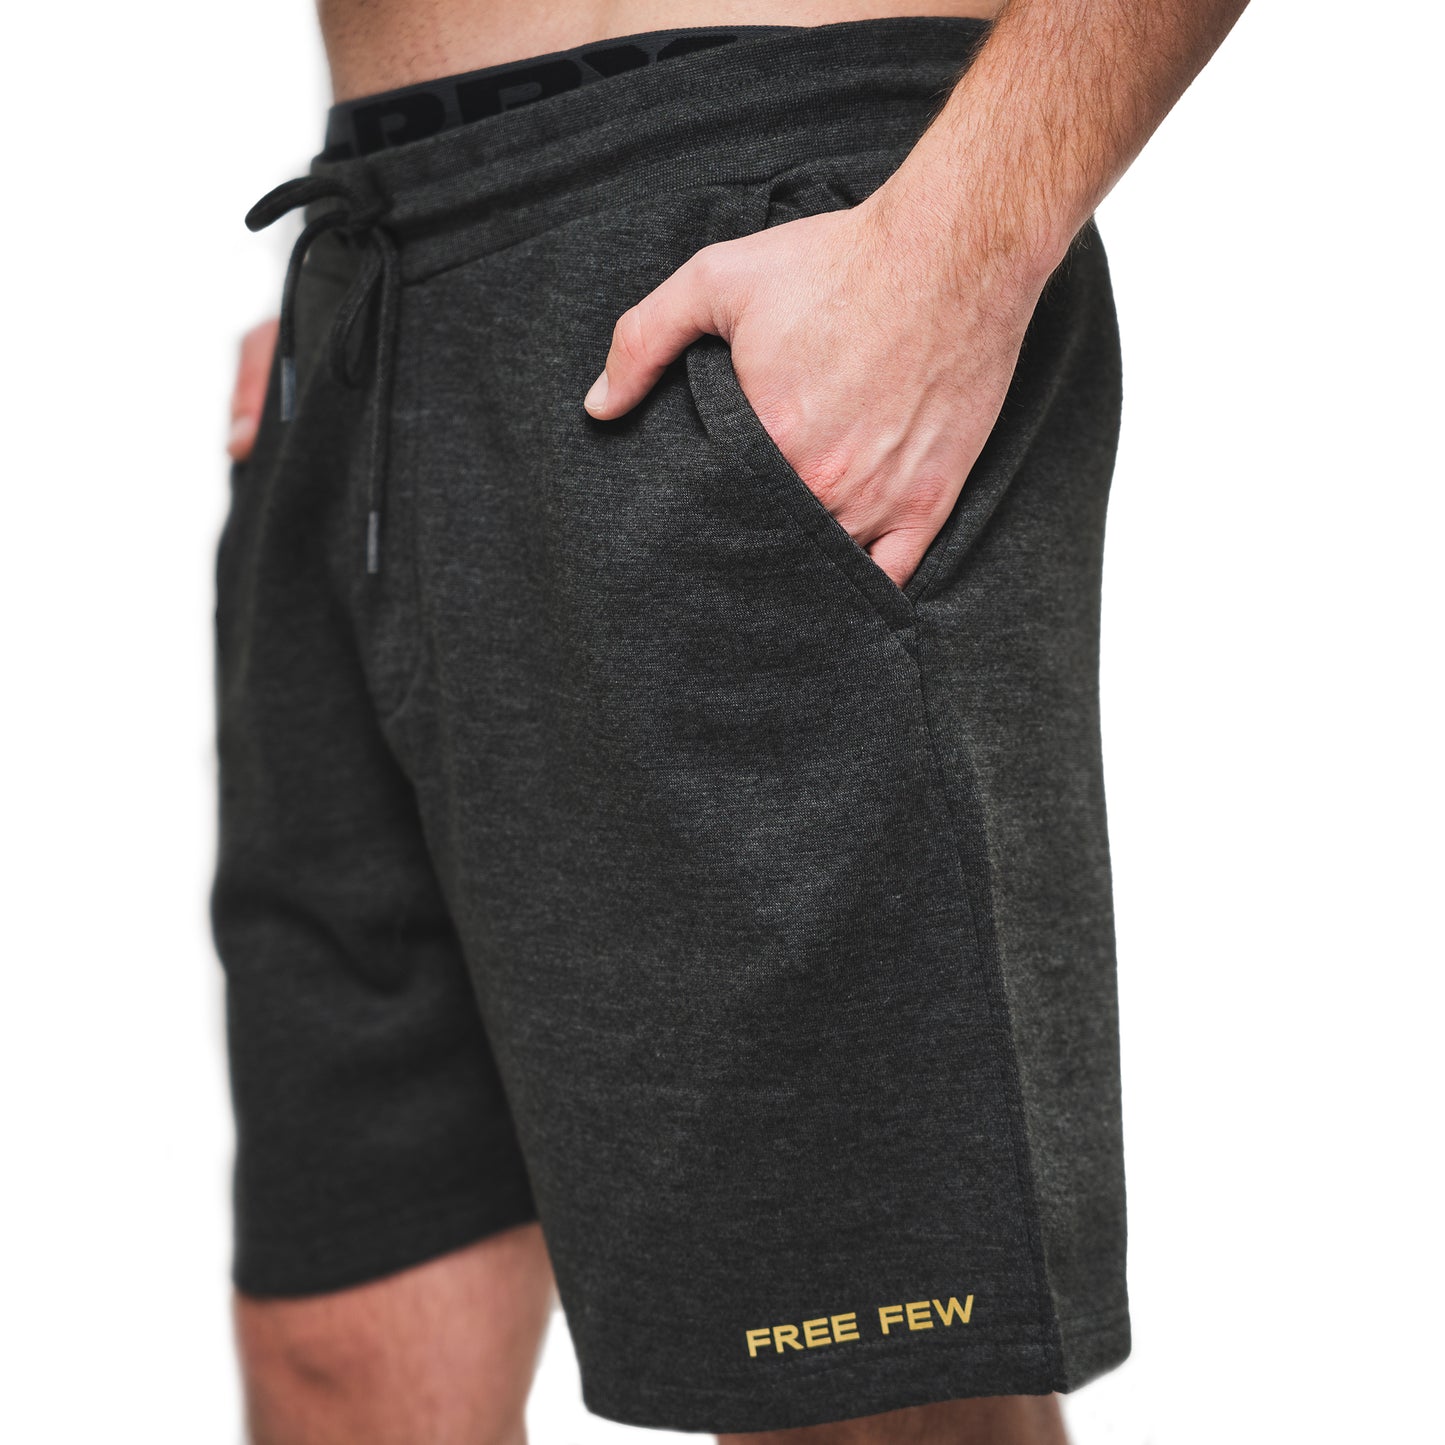 Free Few (Shorts)